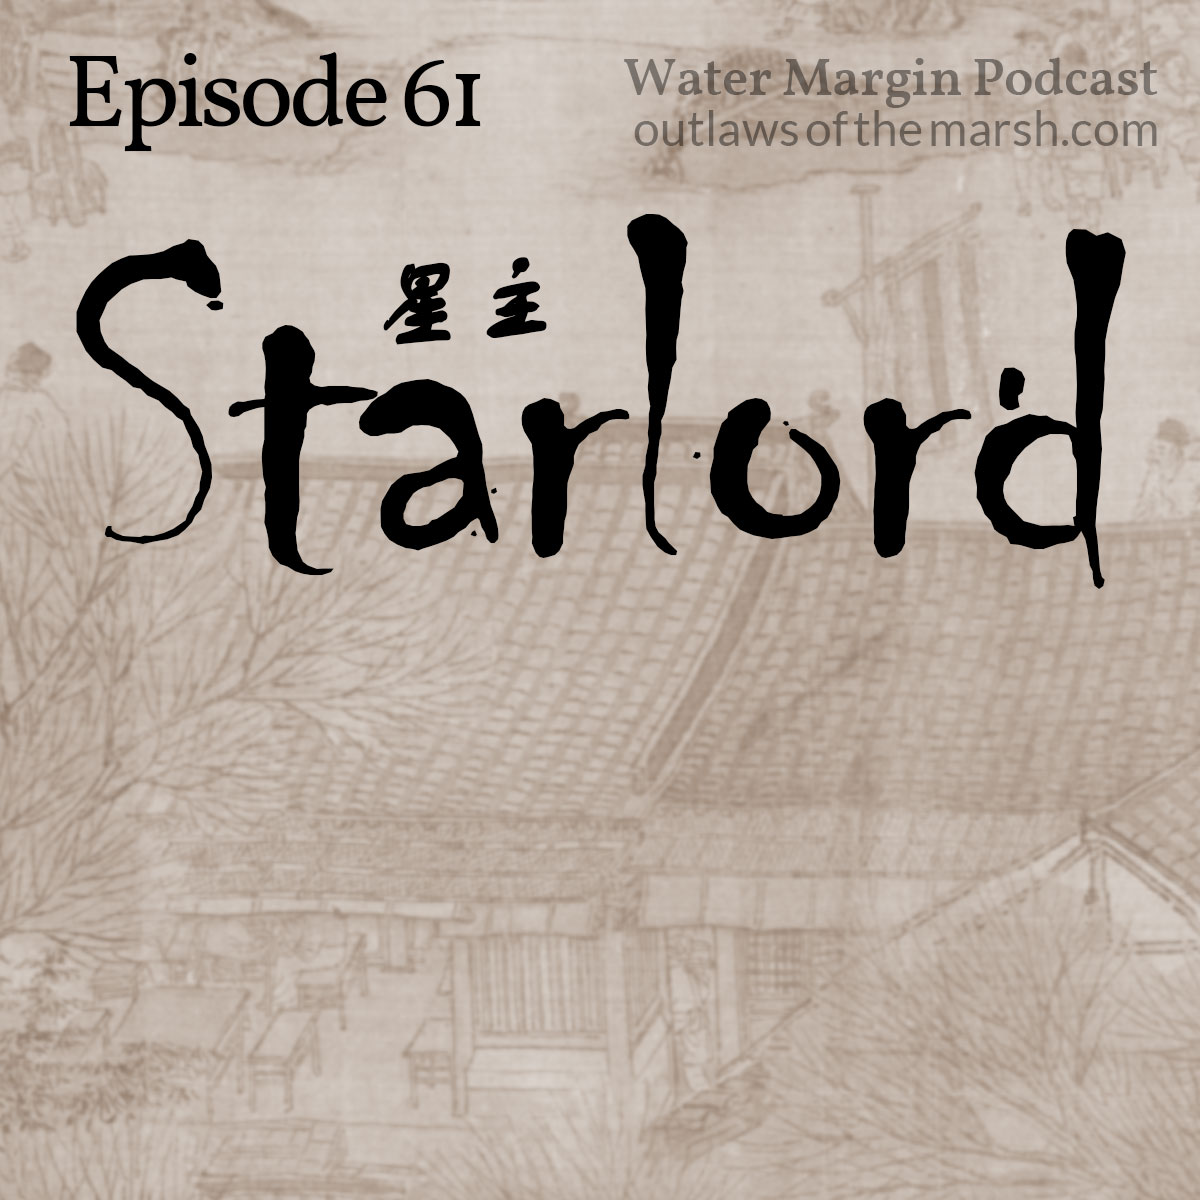 Water Margin Podcast: Episode 061